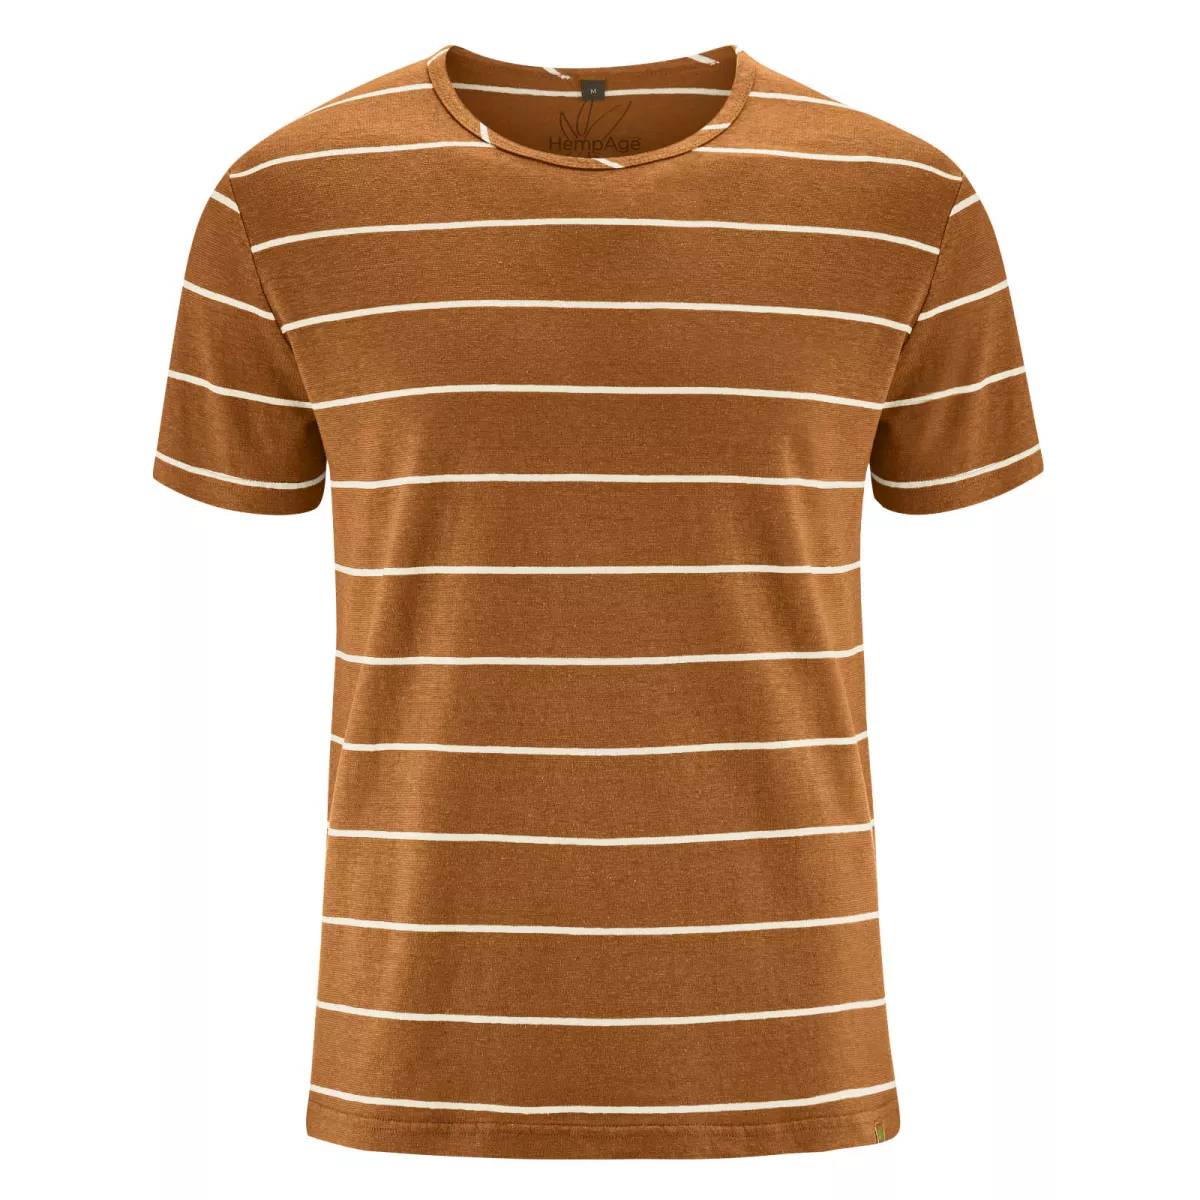 Tee shirt bio couleur amande homme motif rayures 